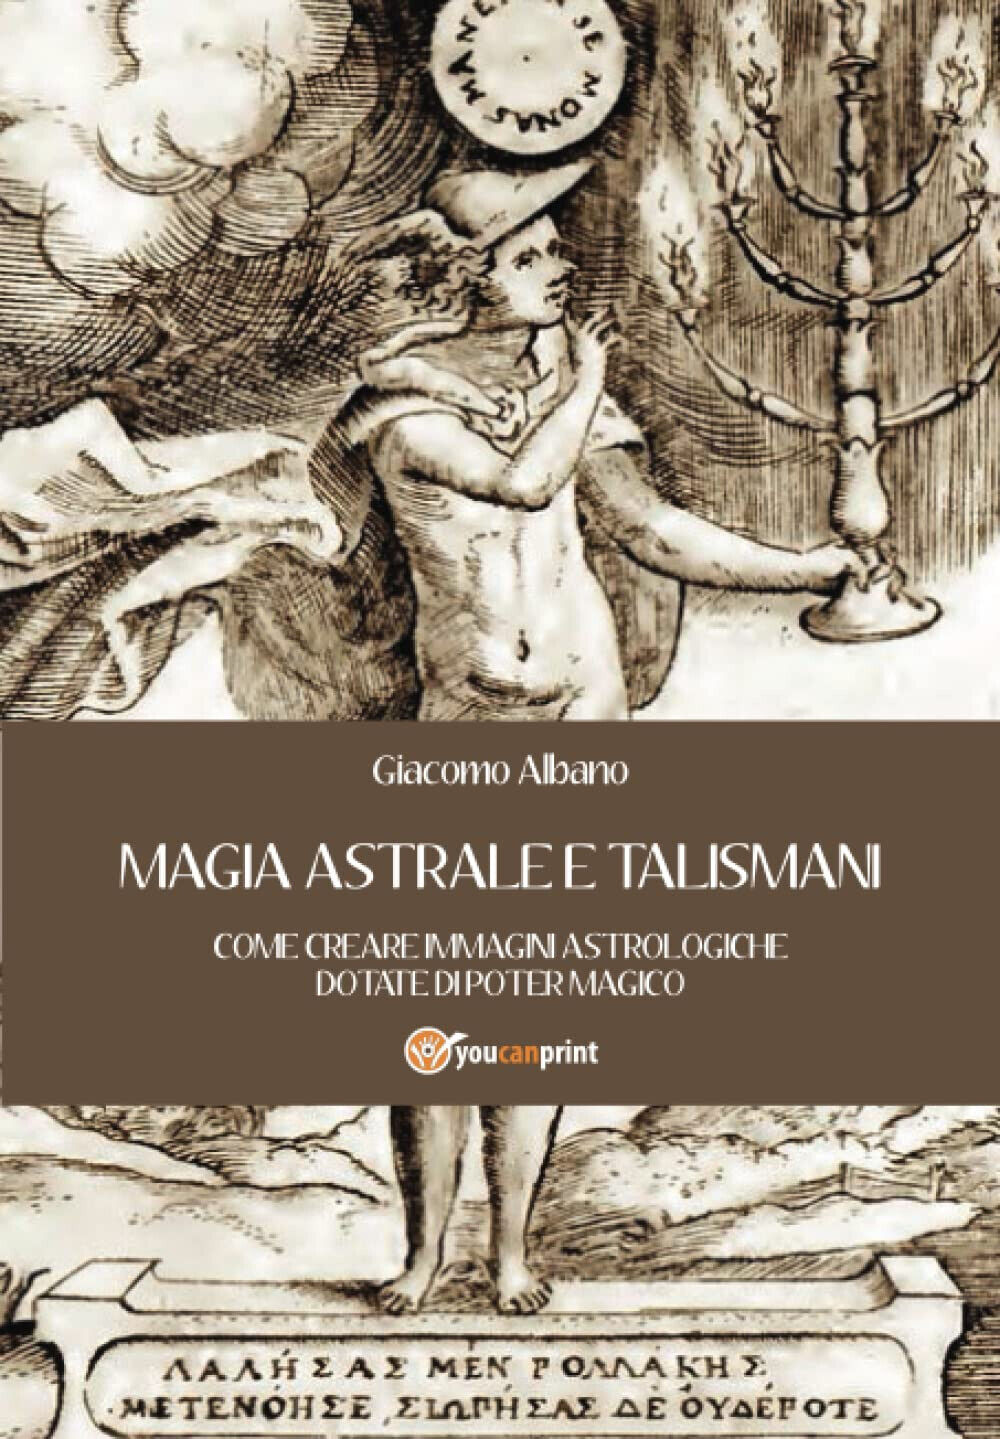 Magia astrale e talismani - Giacomo Albano -Youcanprint, 2013 libro usato